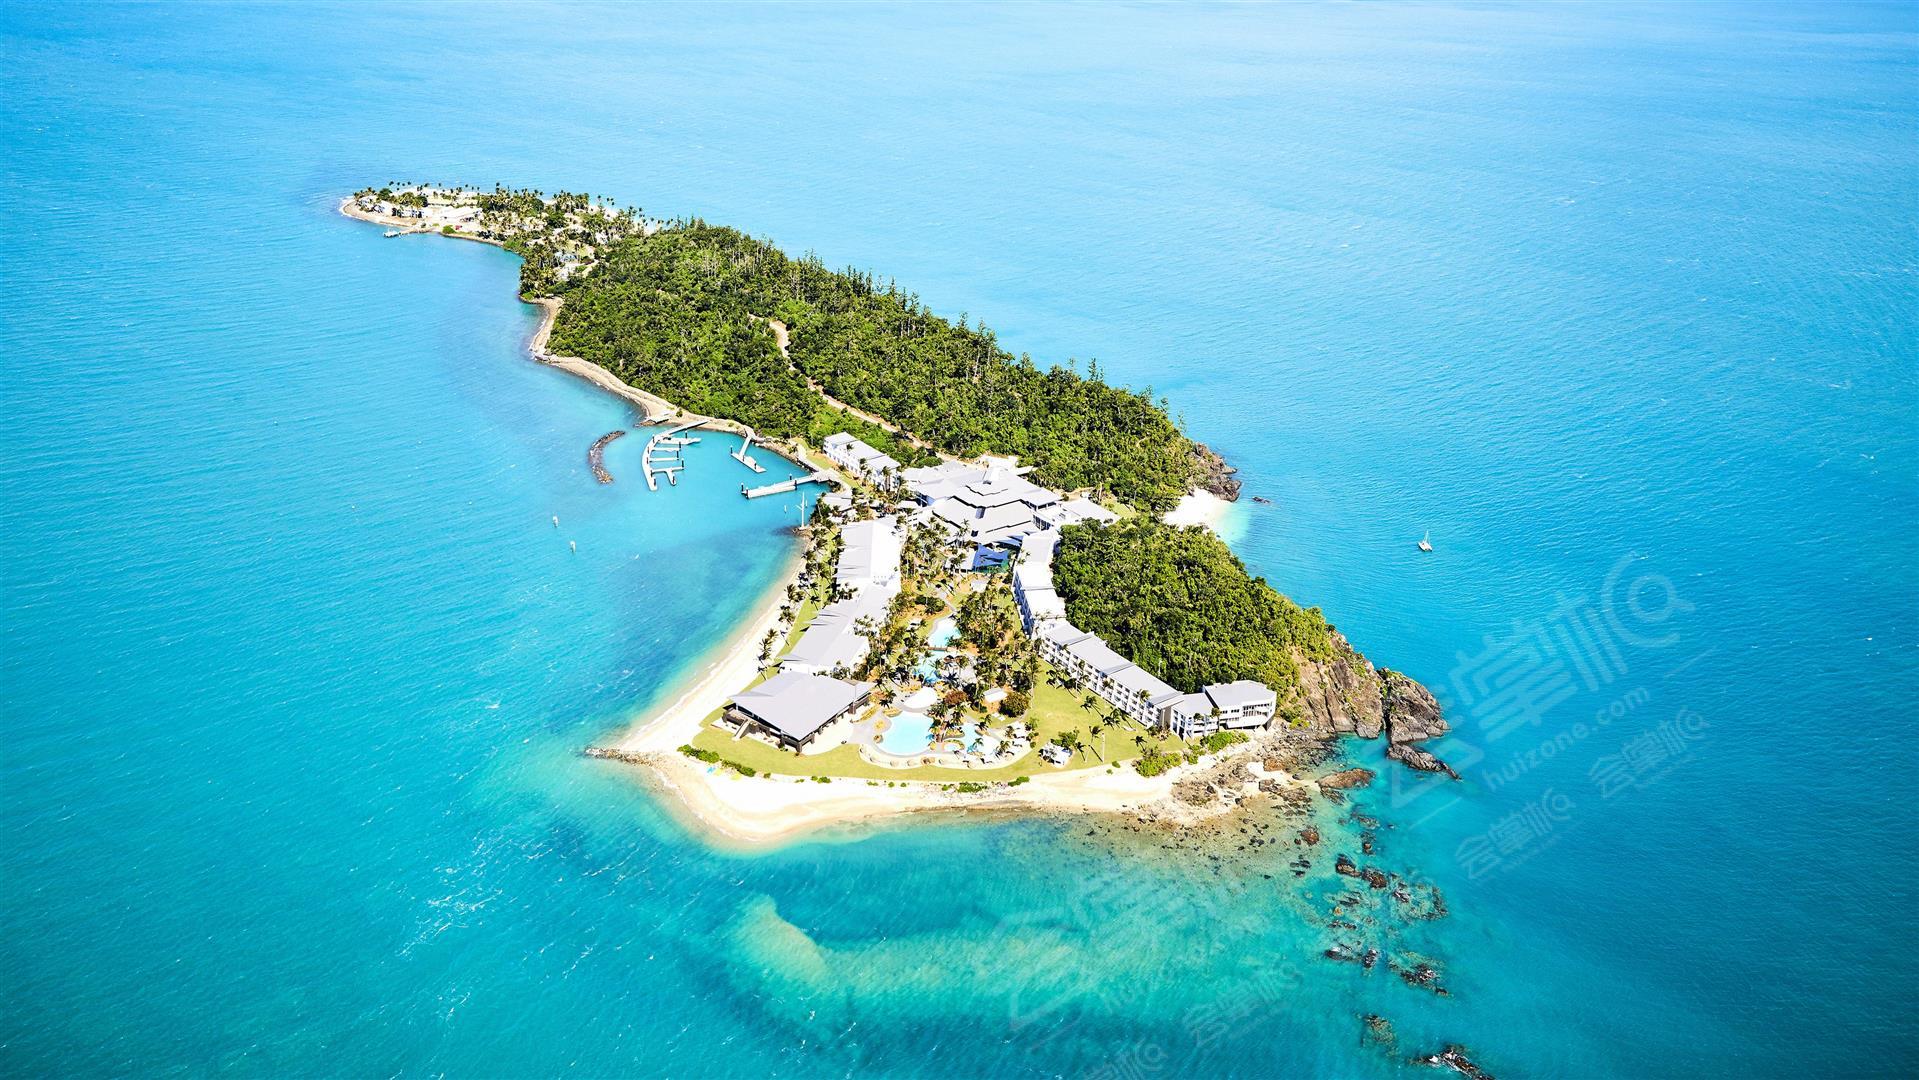 Daydream Island Resort and Living Reef